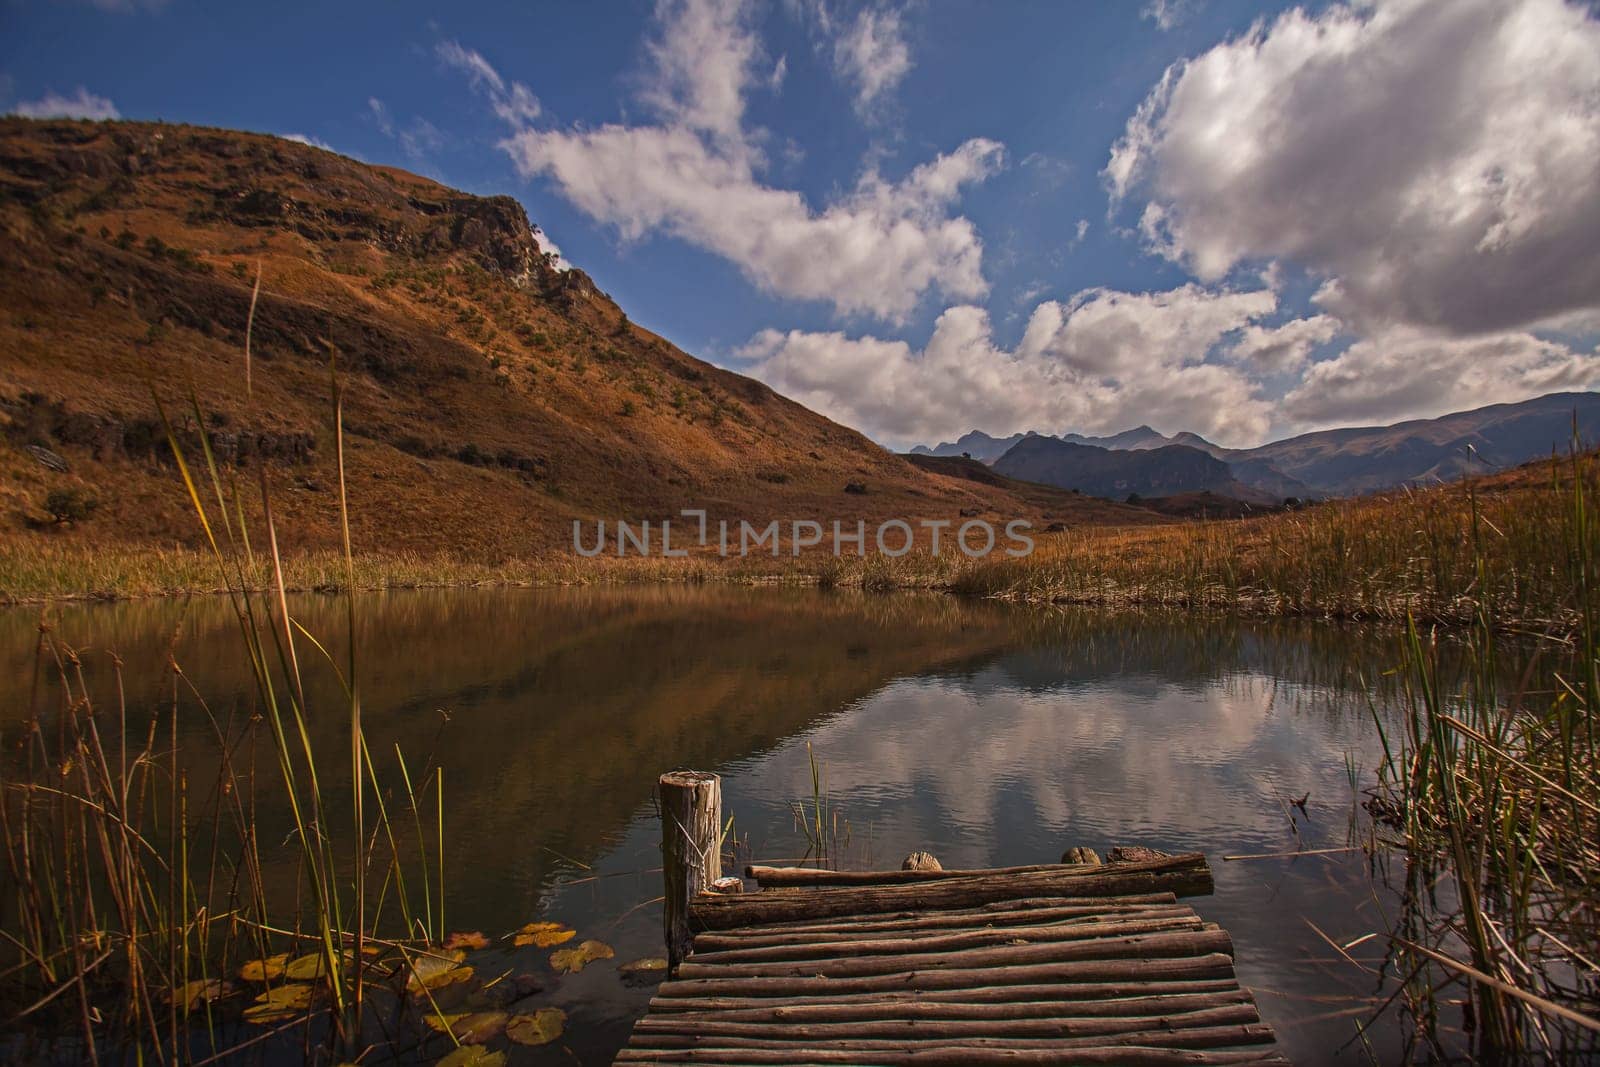 Drakensberg Trout dam 15783 by kobus_peche